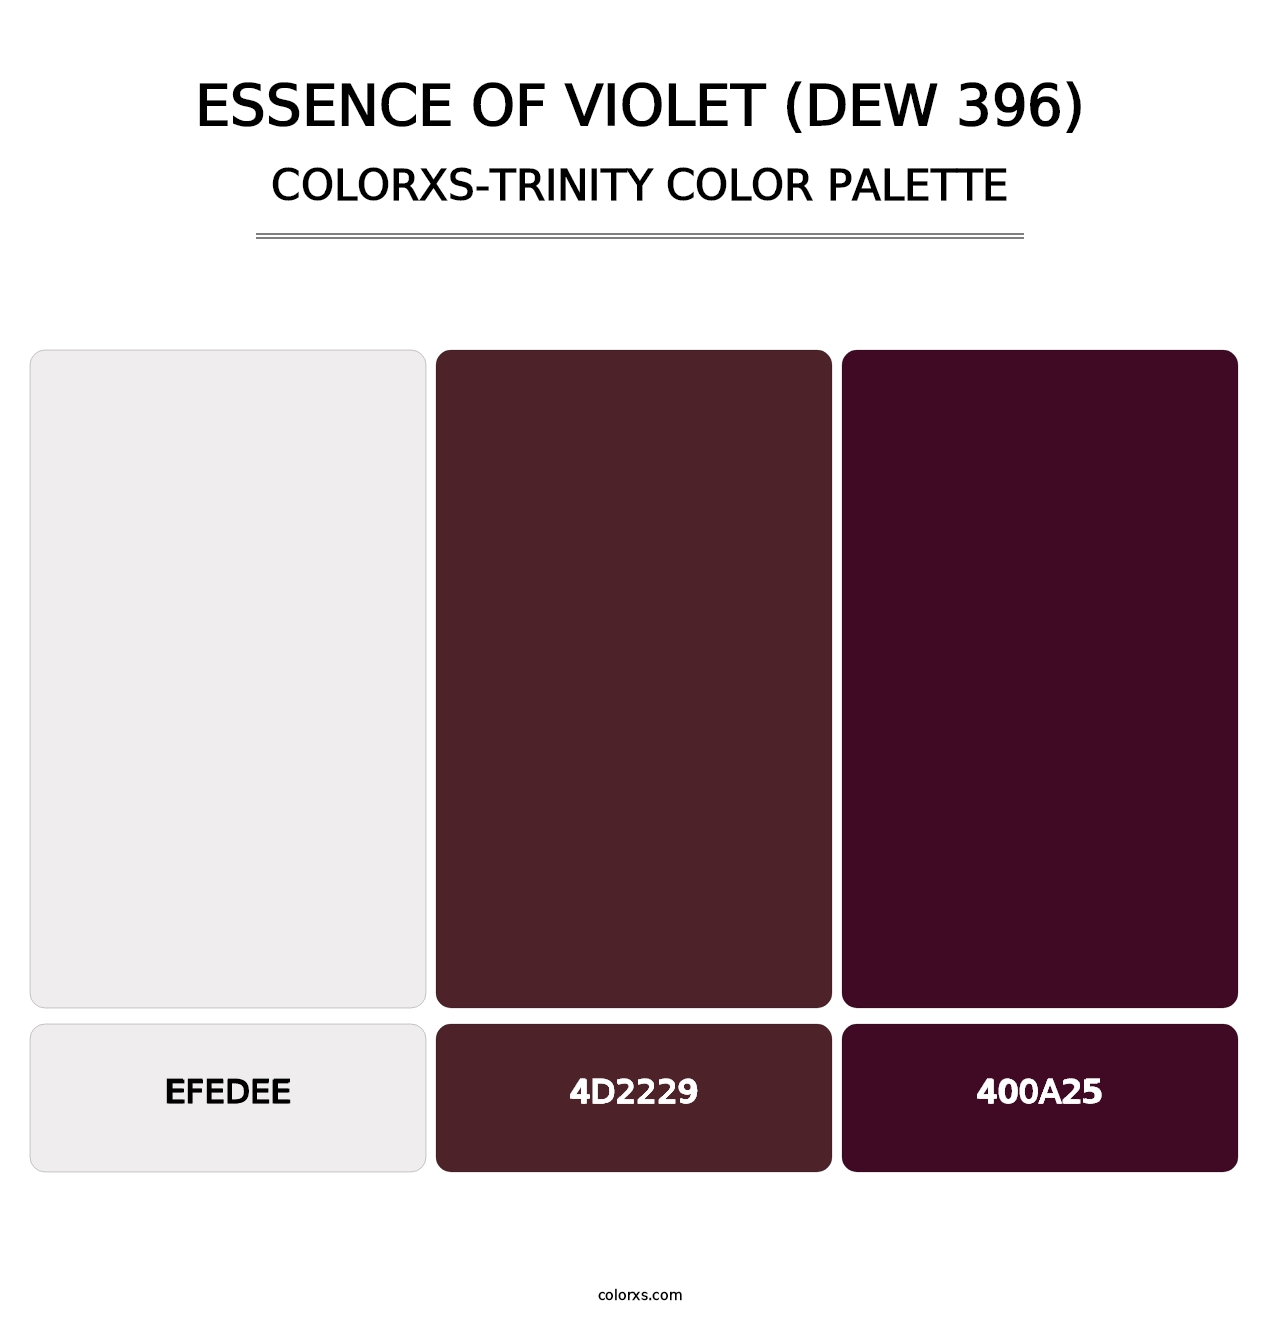 Essence of Violet (DEW 396) - Colorxs Trinity Palette